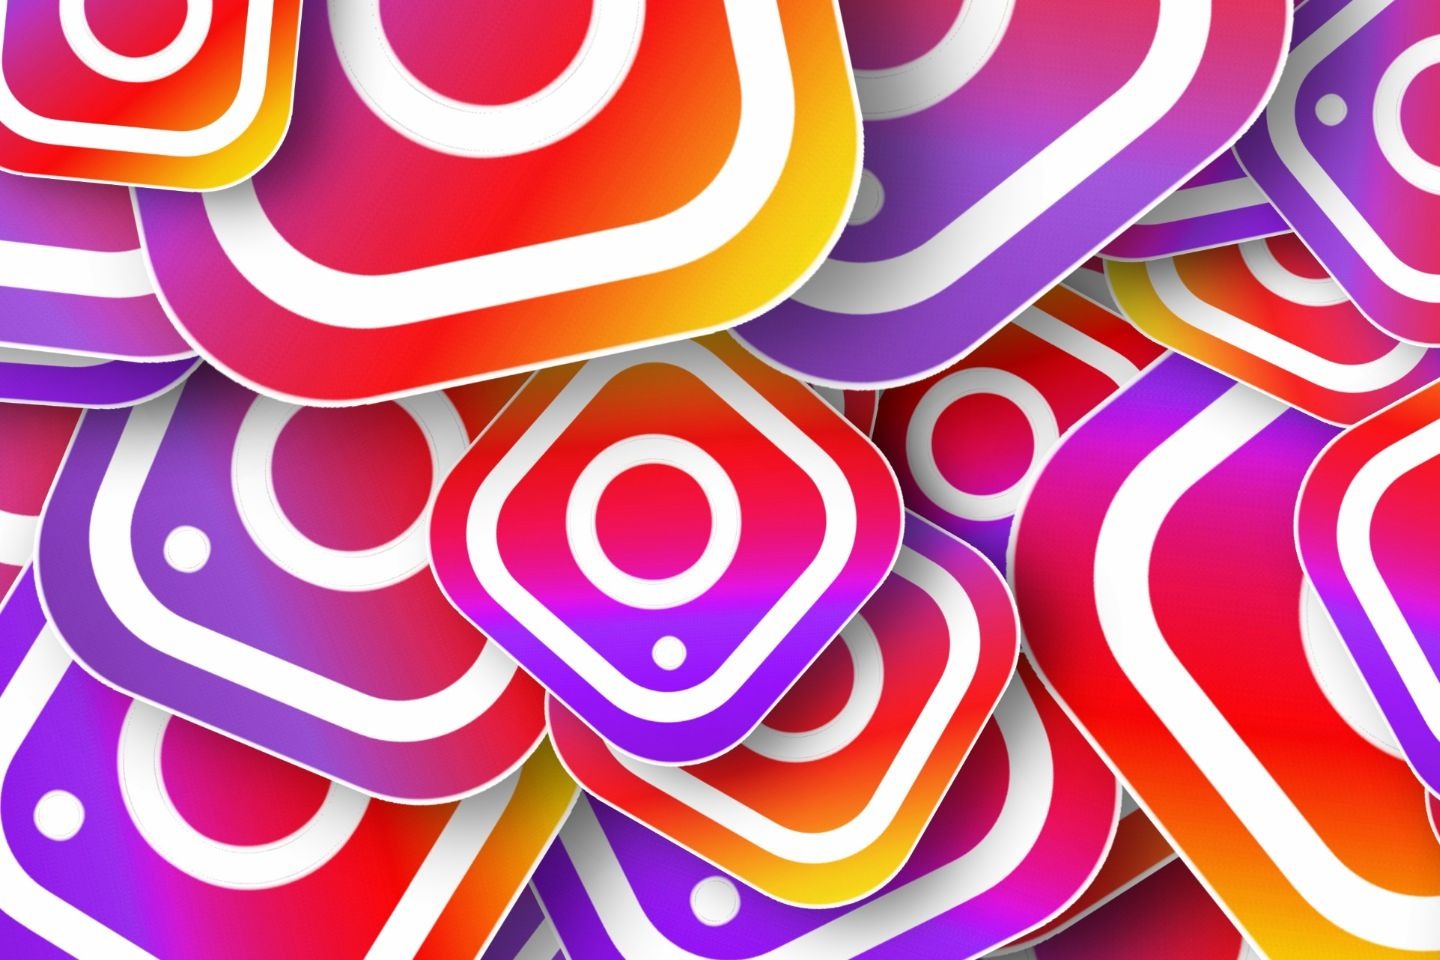 🏅 How to create custom Instagram filter